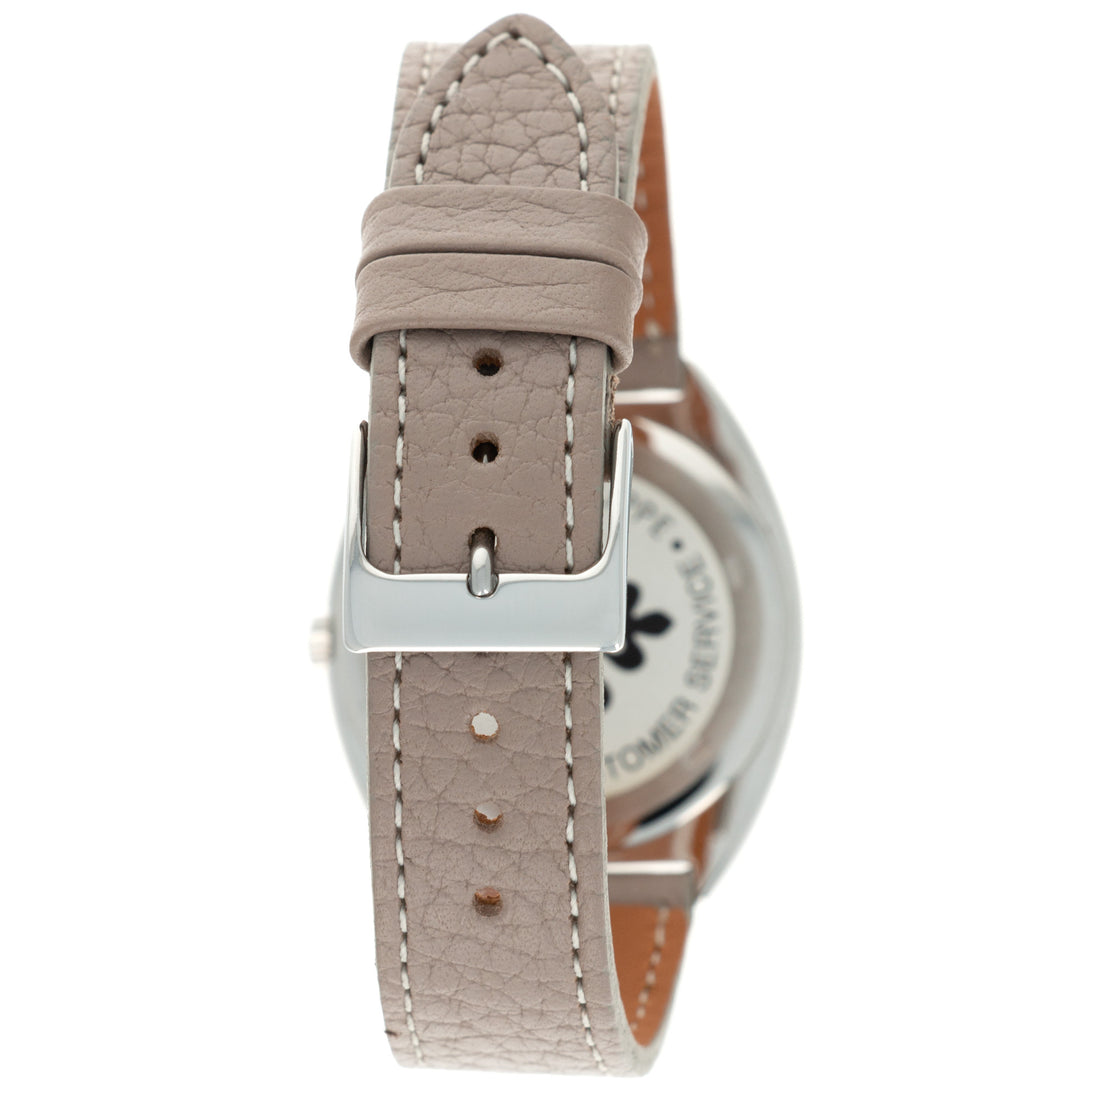 Patek Philippe Stainless Steel Watch Ref. 3574